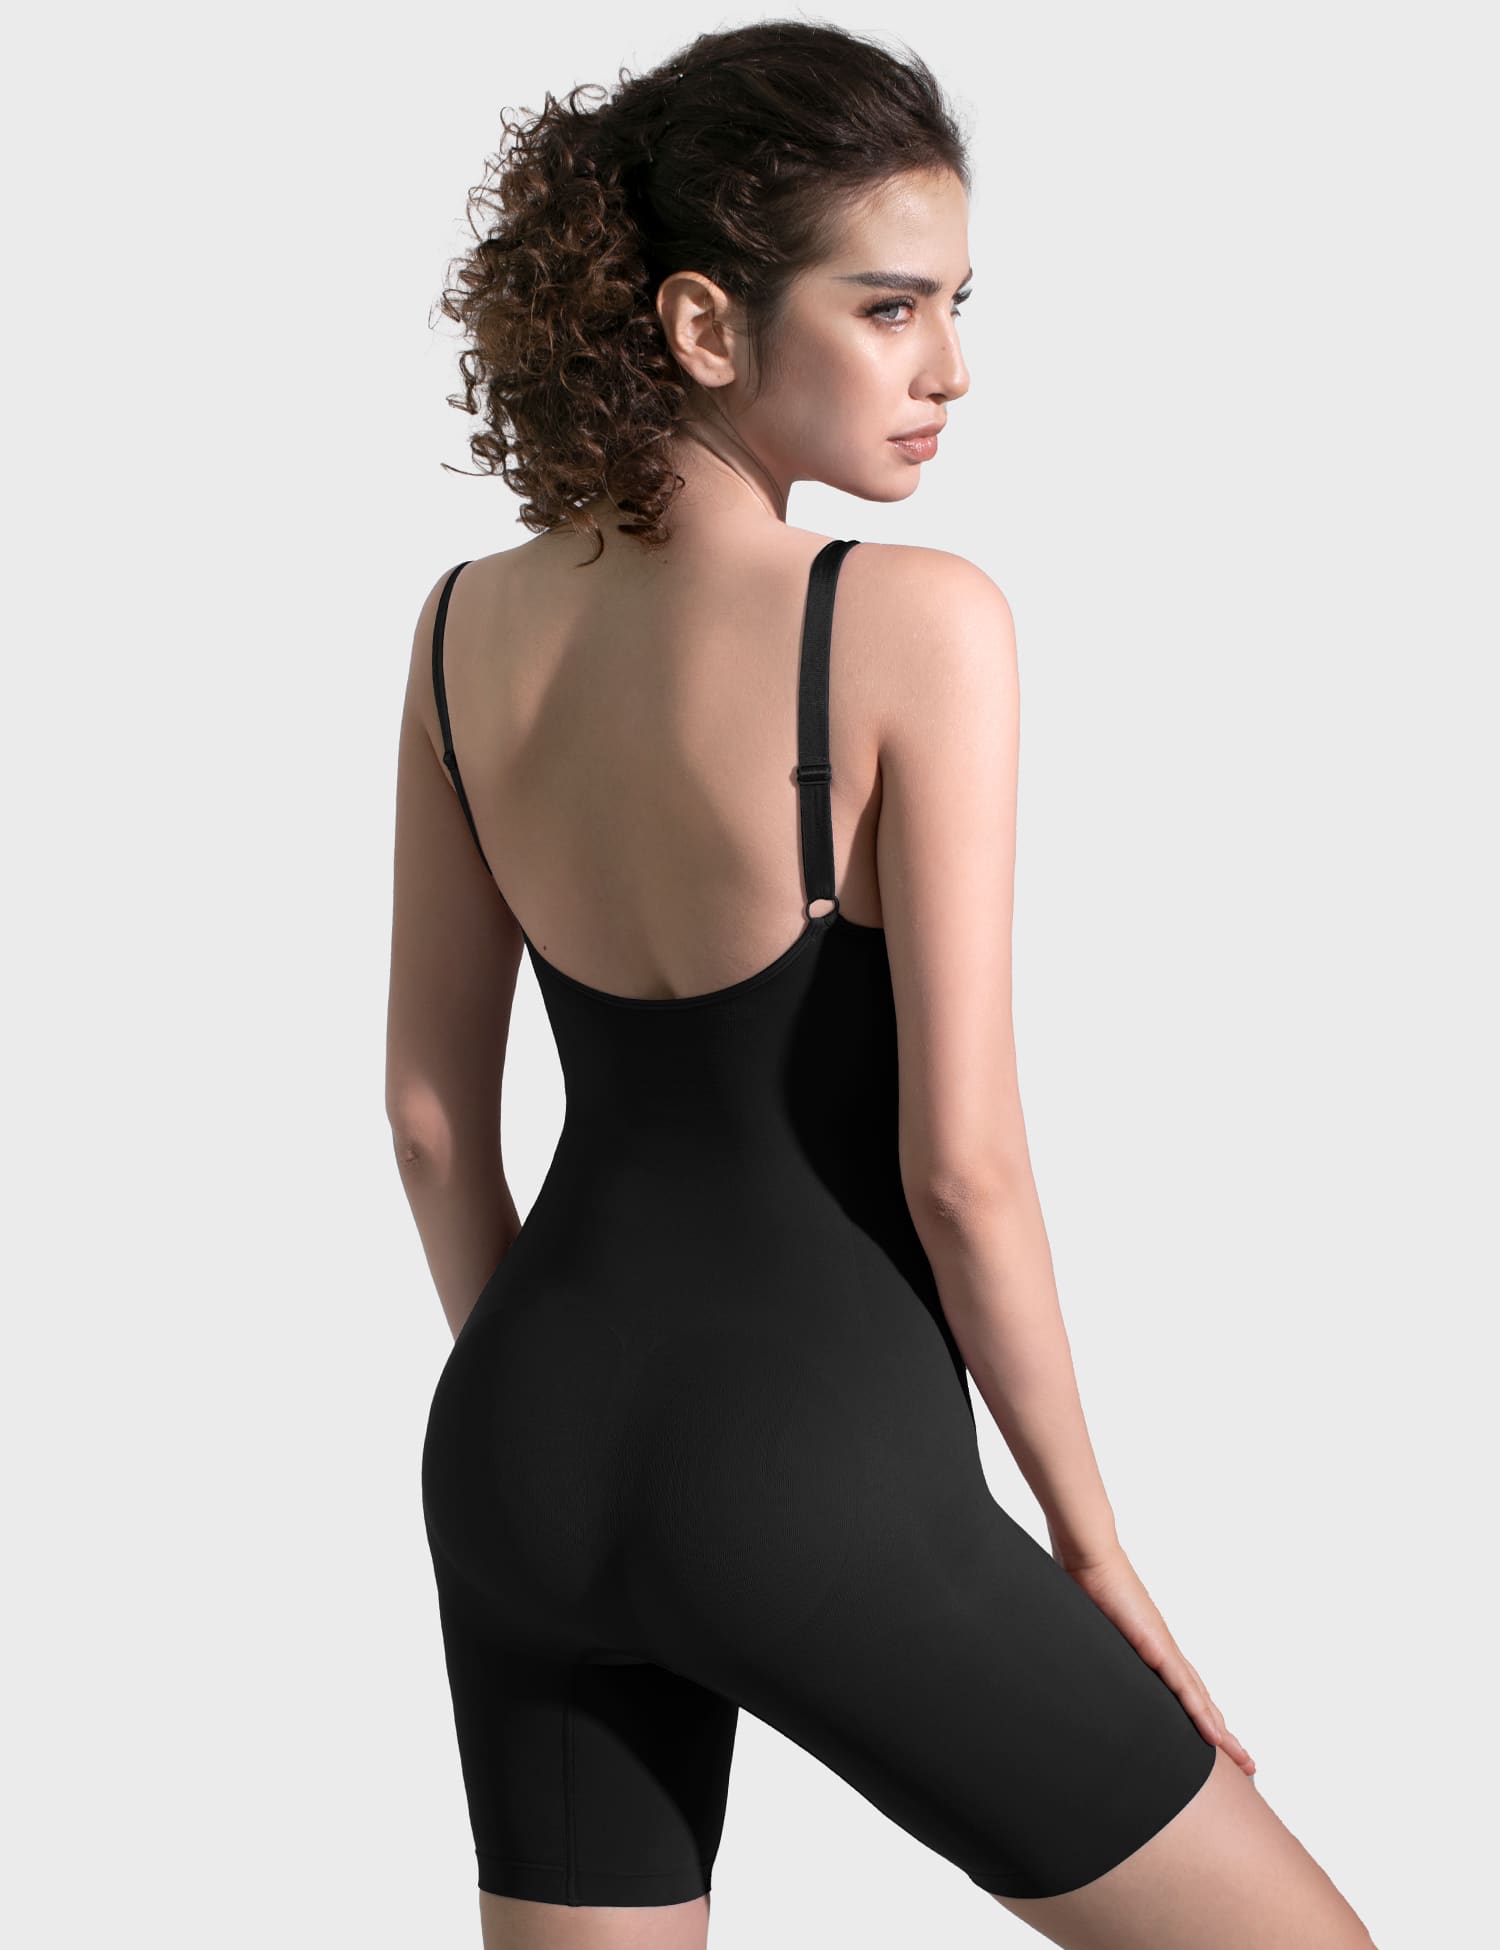 Buy PUMIEY Shapewear Bodysuit for Women Tummy Control V-Neck With